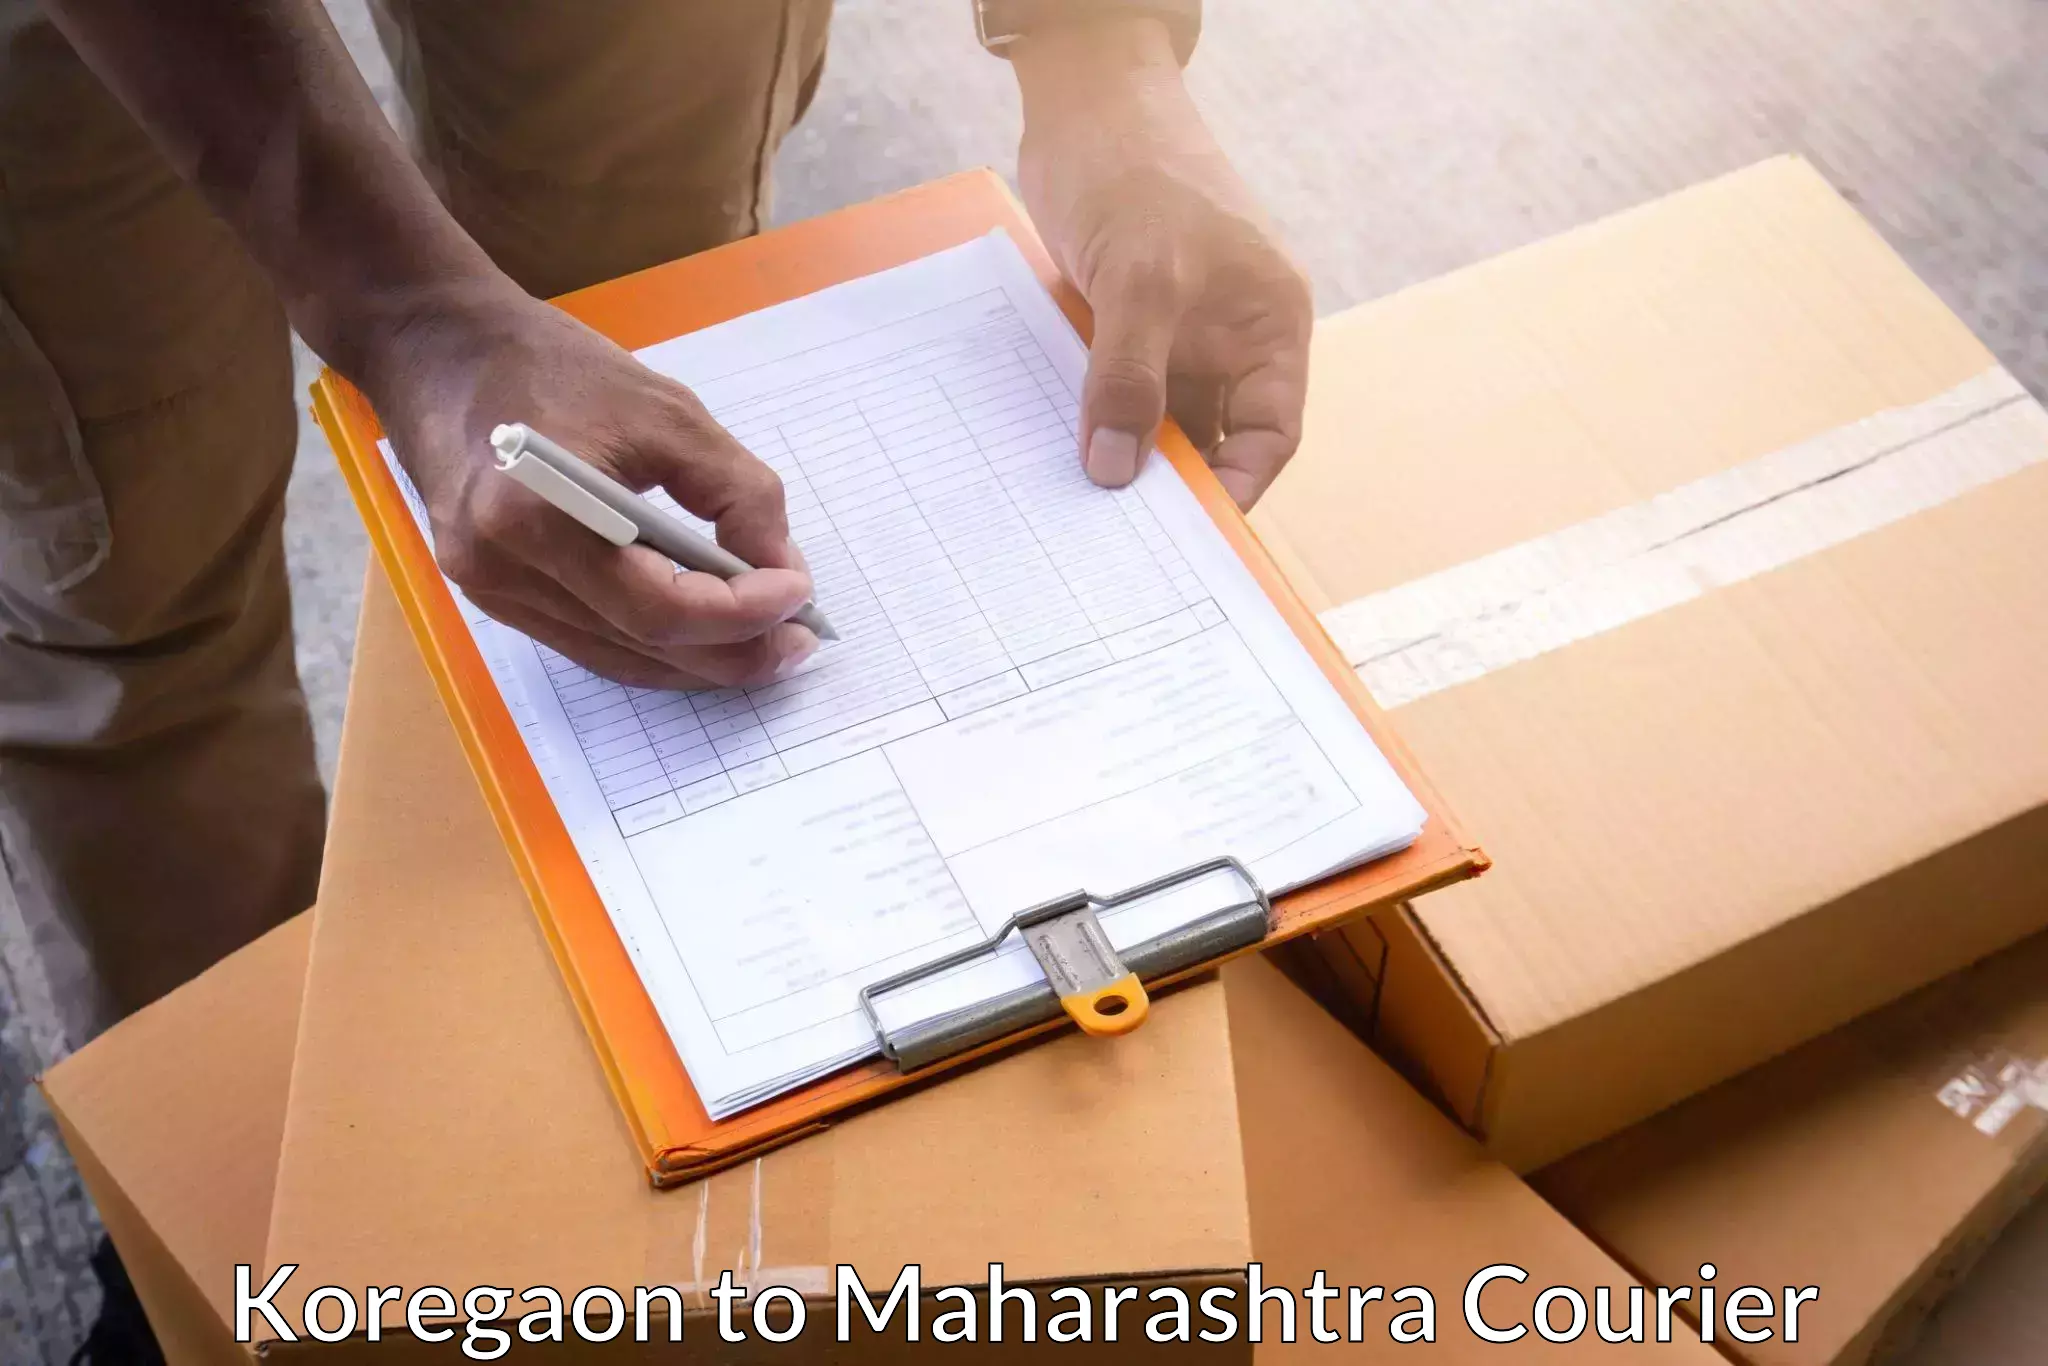 Shipping and handling Koregaon to Pune